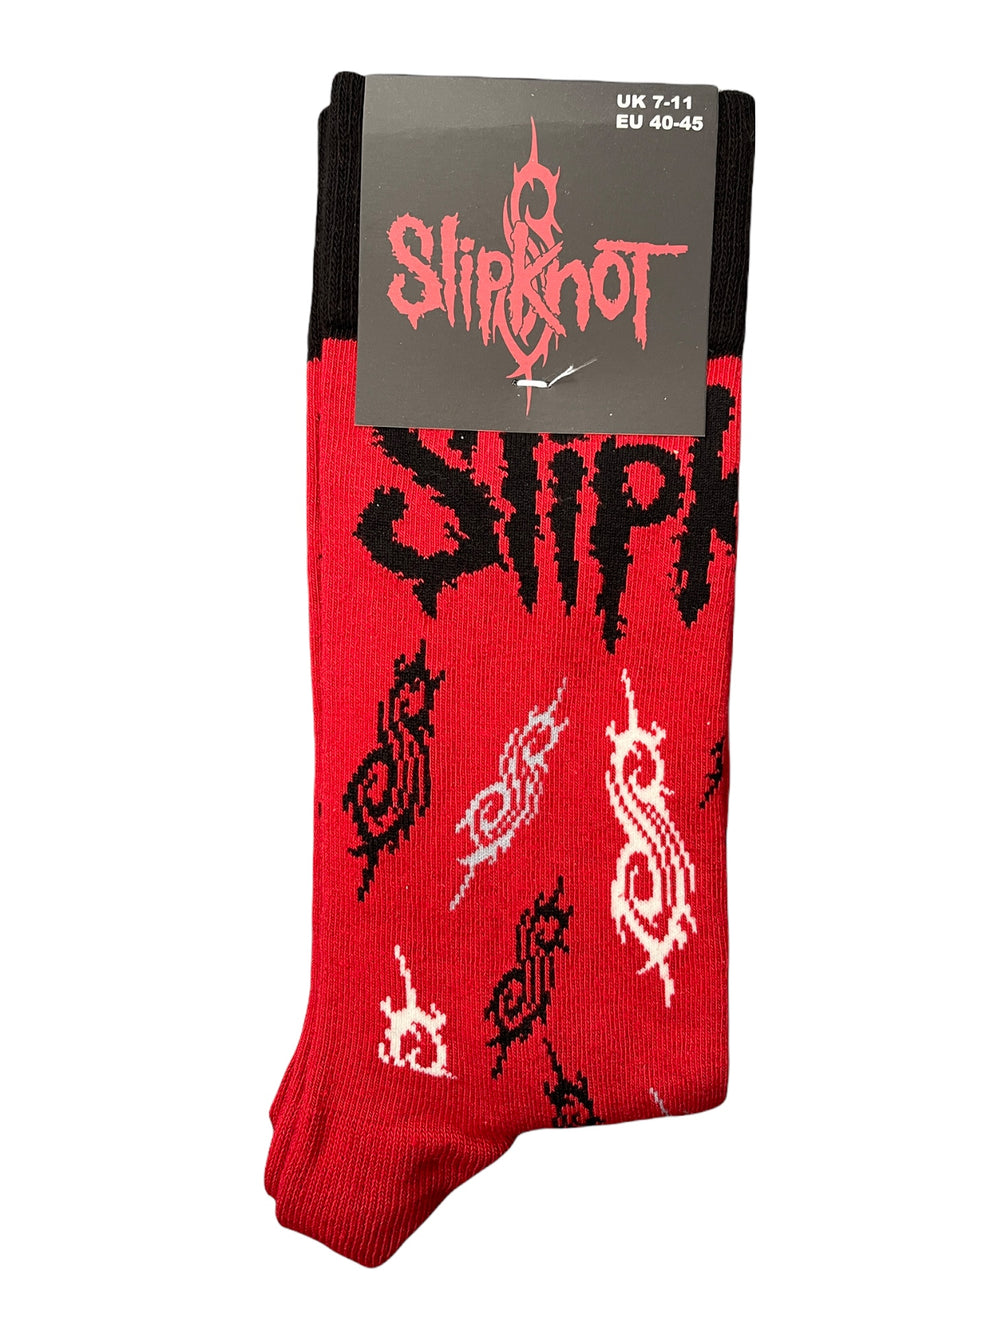 Slipknot Tribal RED Official Product 1 Pair Jacquard Socks Size 7-11 UK Brand New